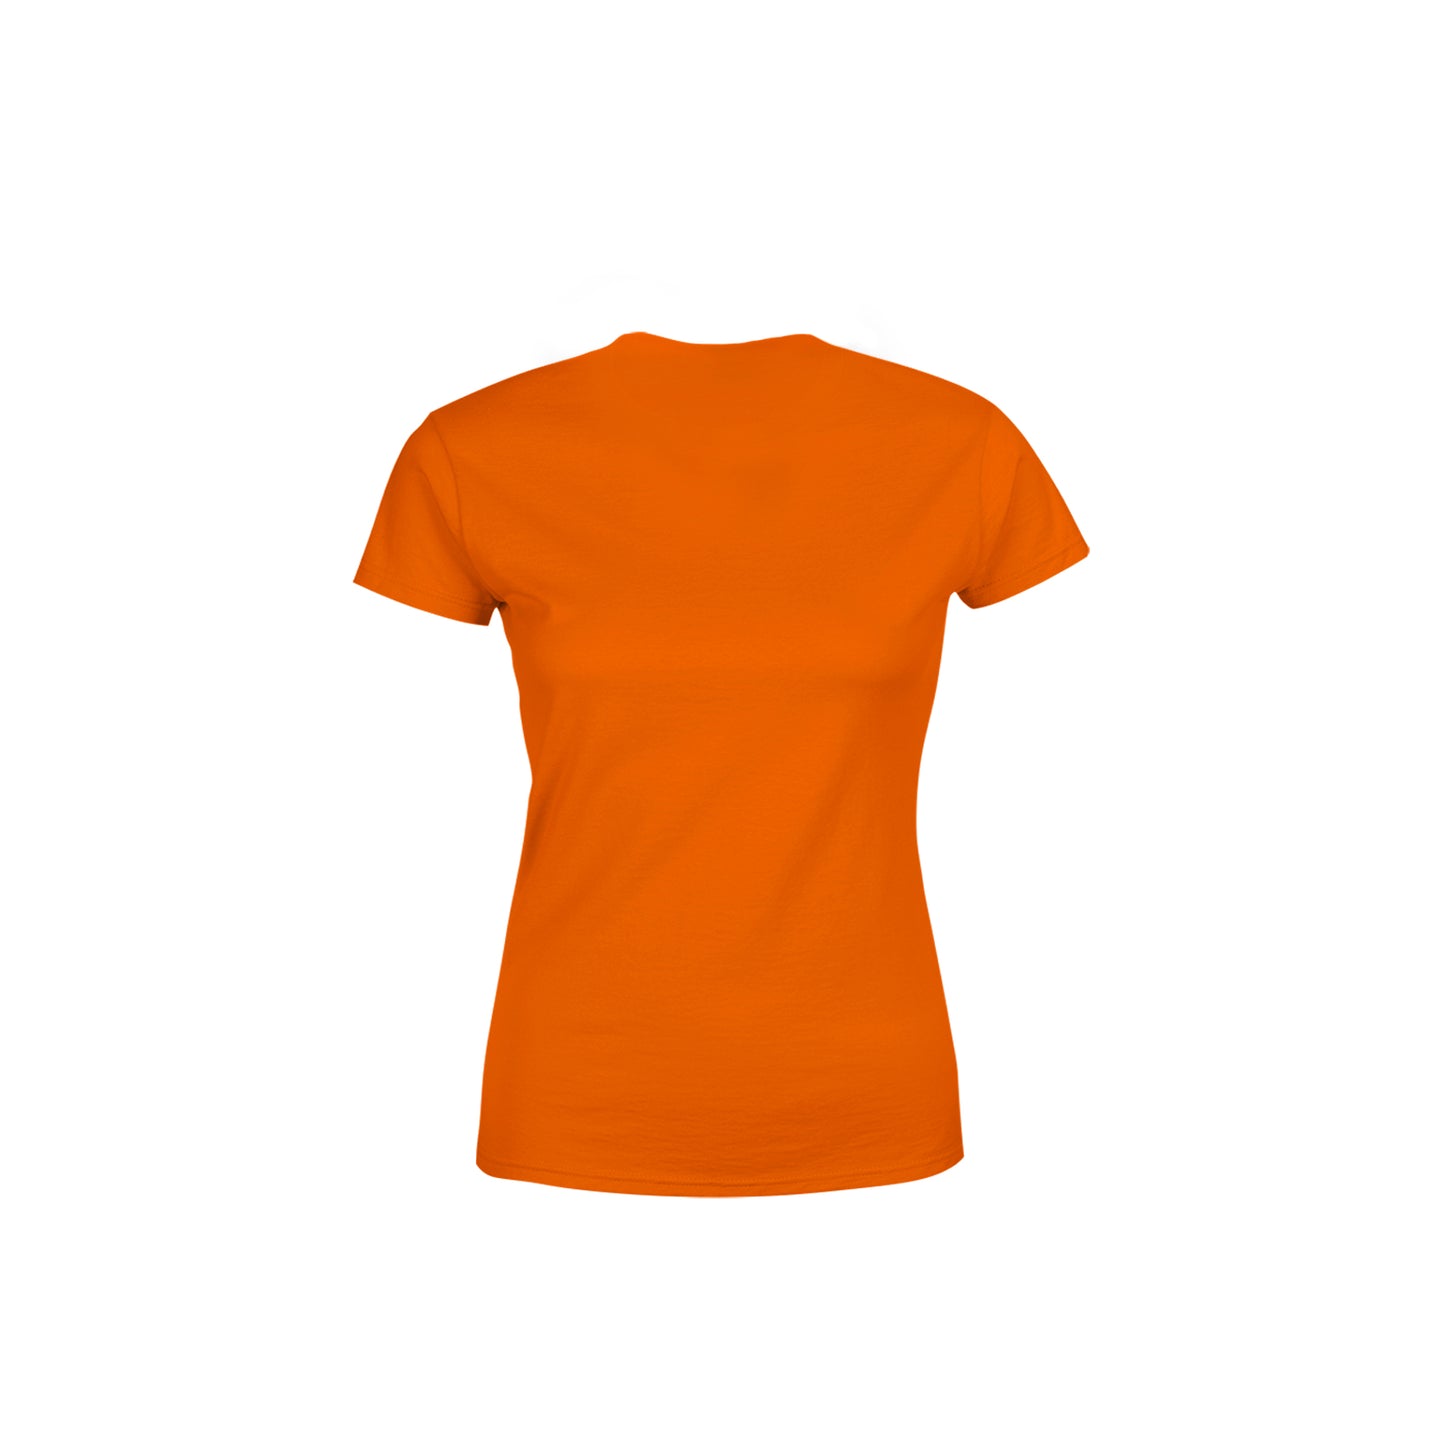 00 Number Women's T-Shirt (Orange)